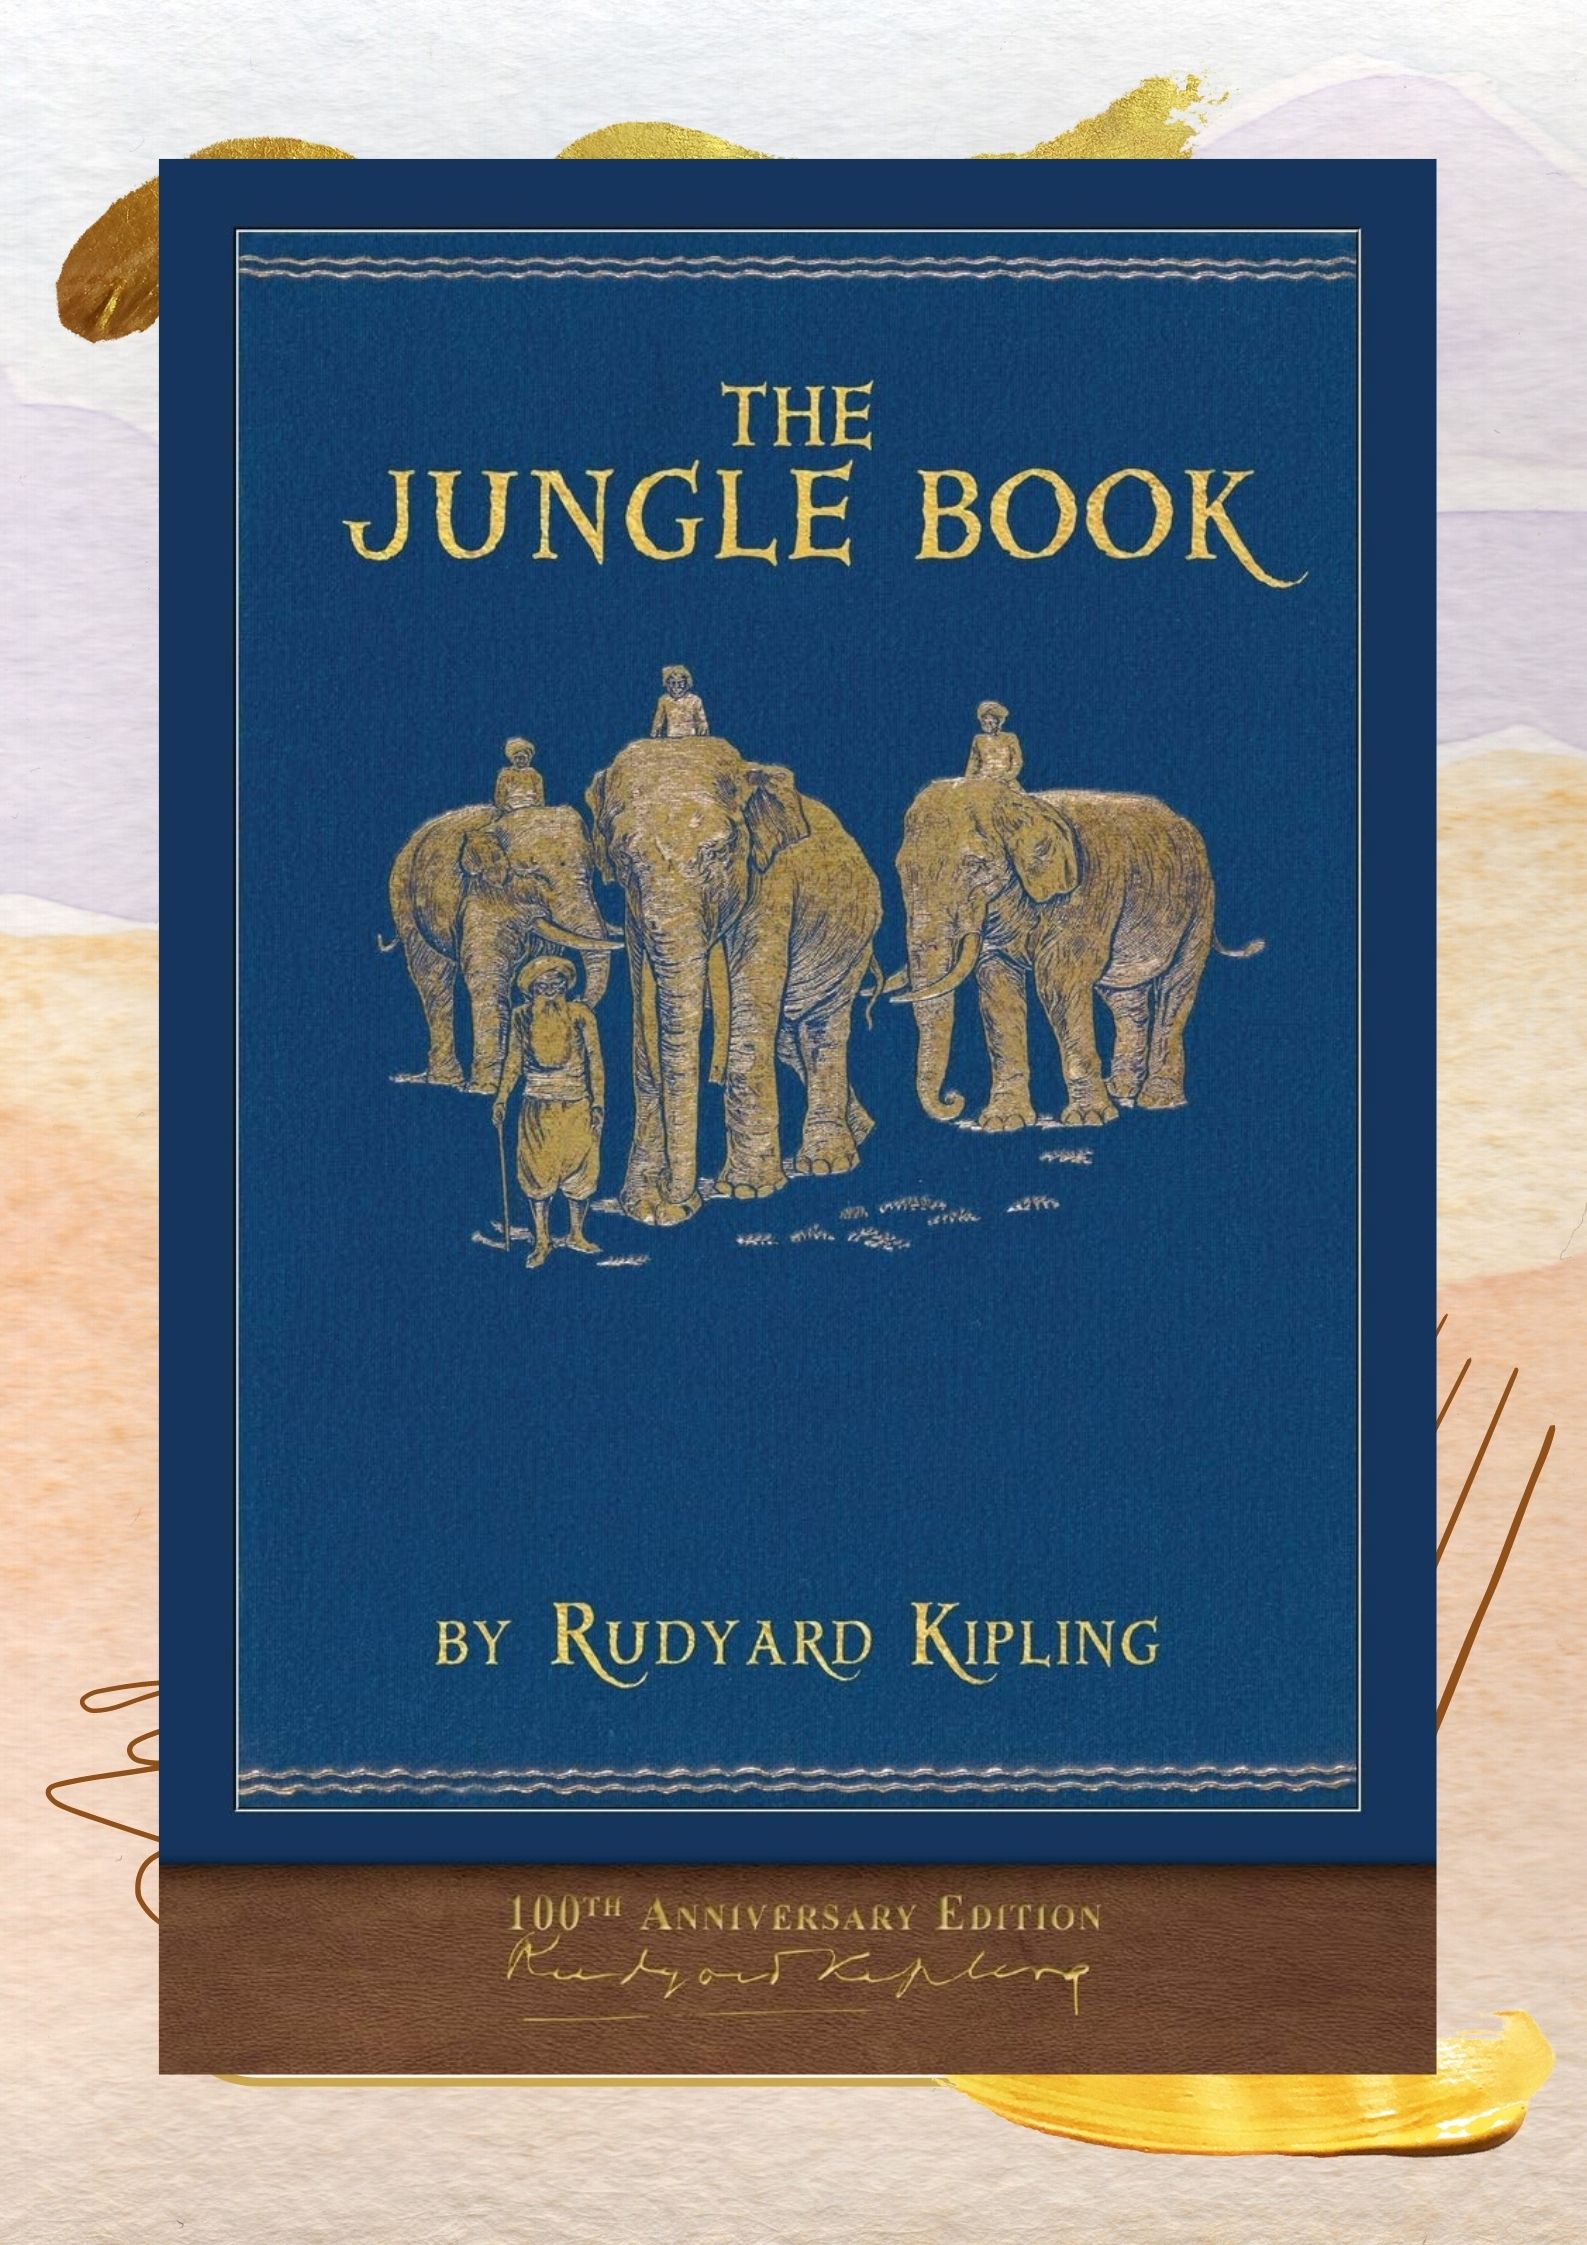 The Jungle Book by Rudyard Kipling Summary